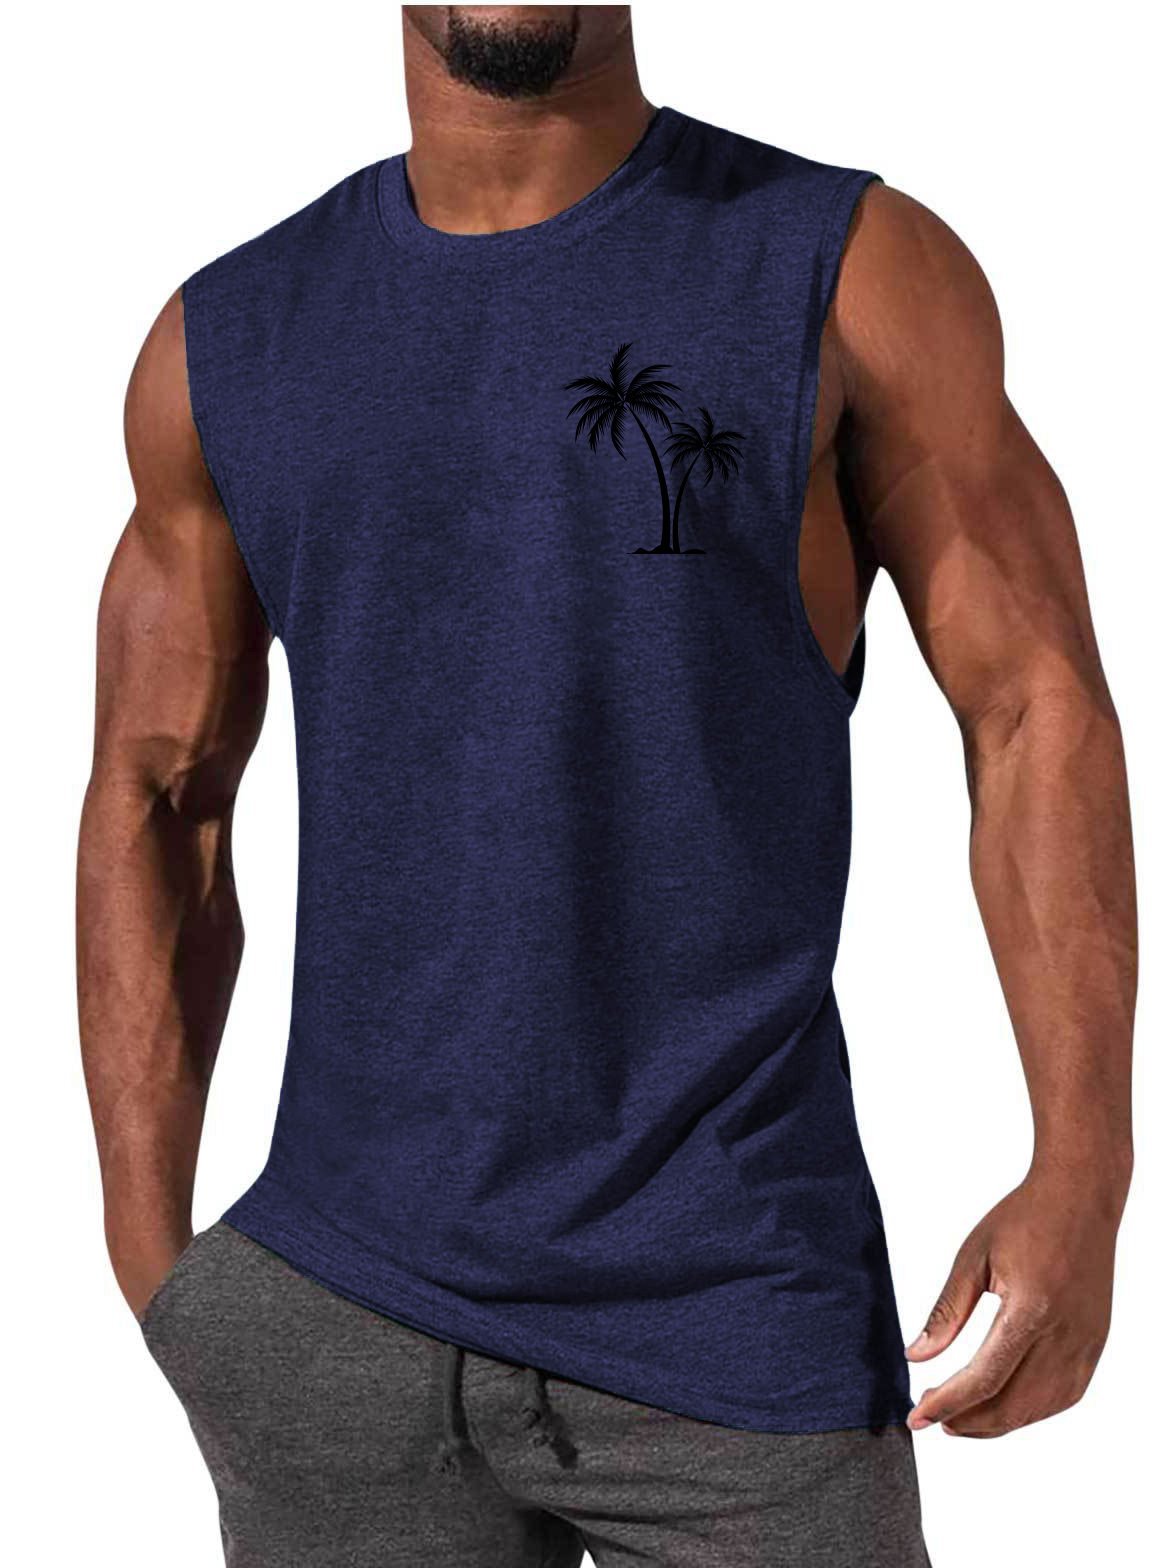 Men's Hawaiian Coco Coconut tree Casual Comfort Print Sleeveless T-Shirt